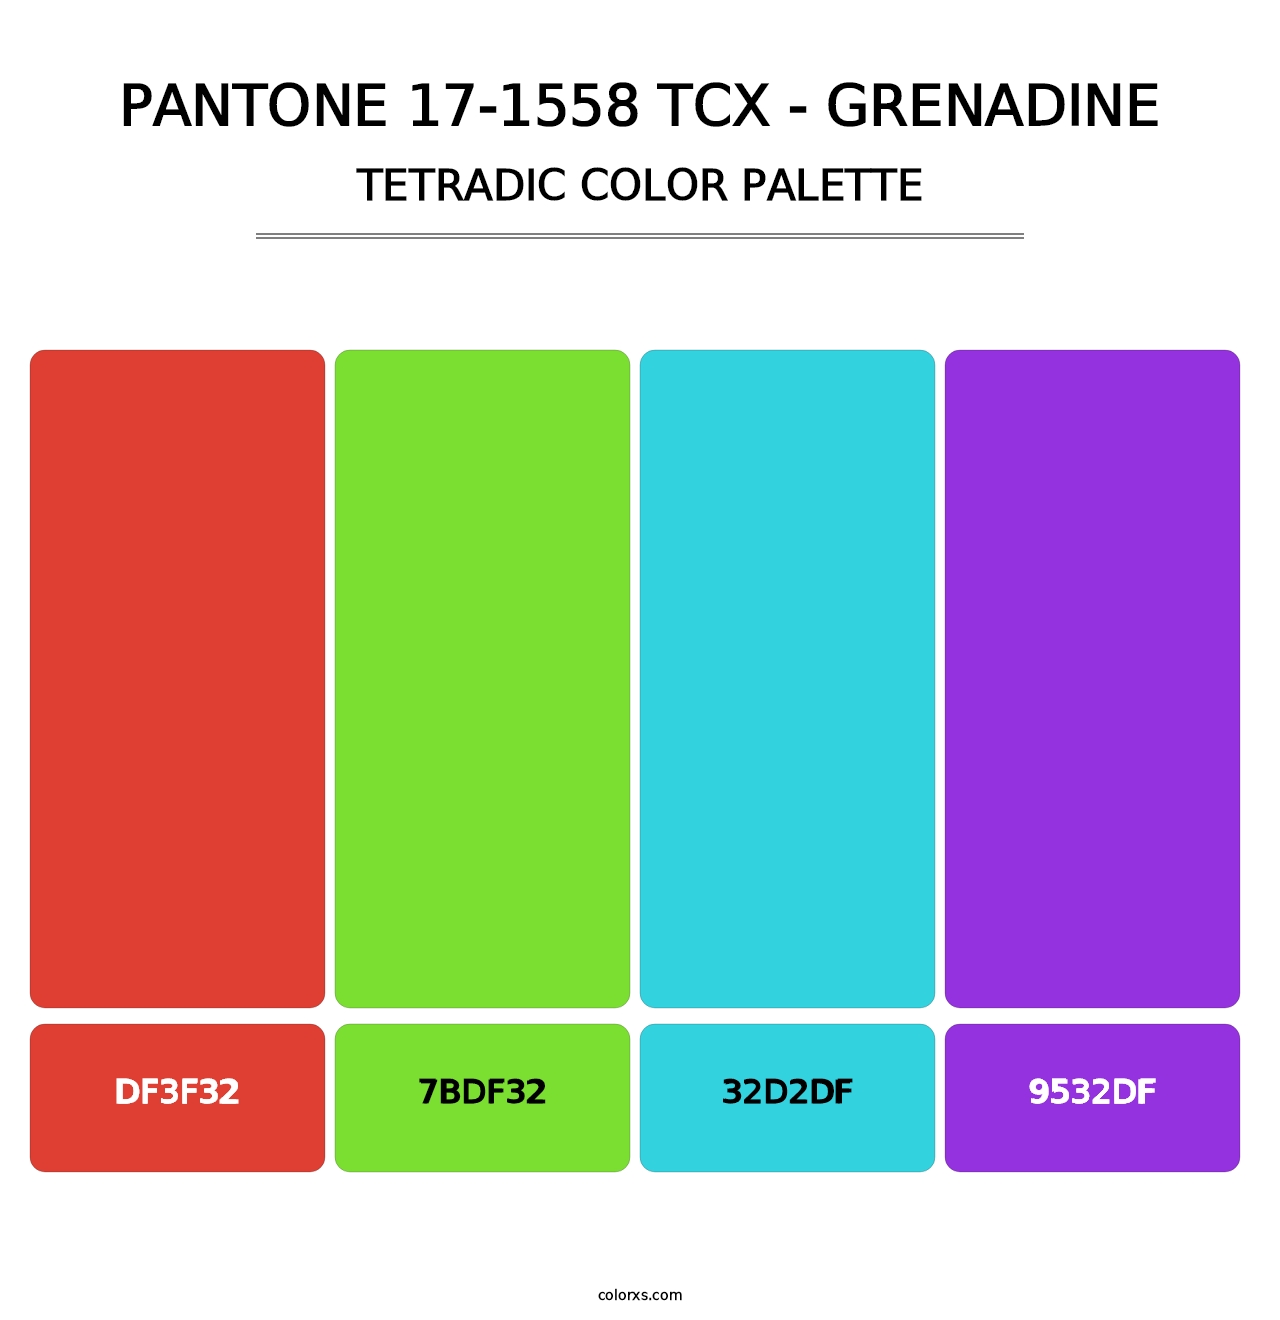 PANTONE 17-1558 TCX - Grenadine - Tetradic Color Palette